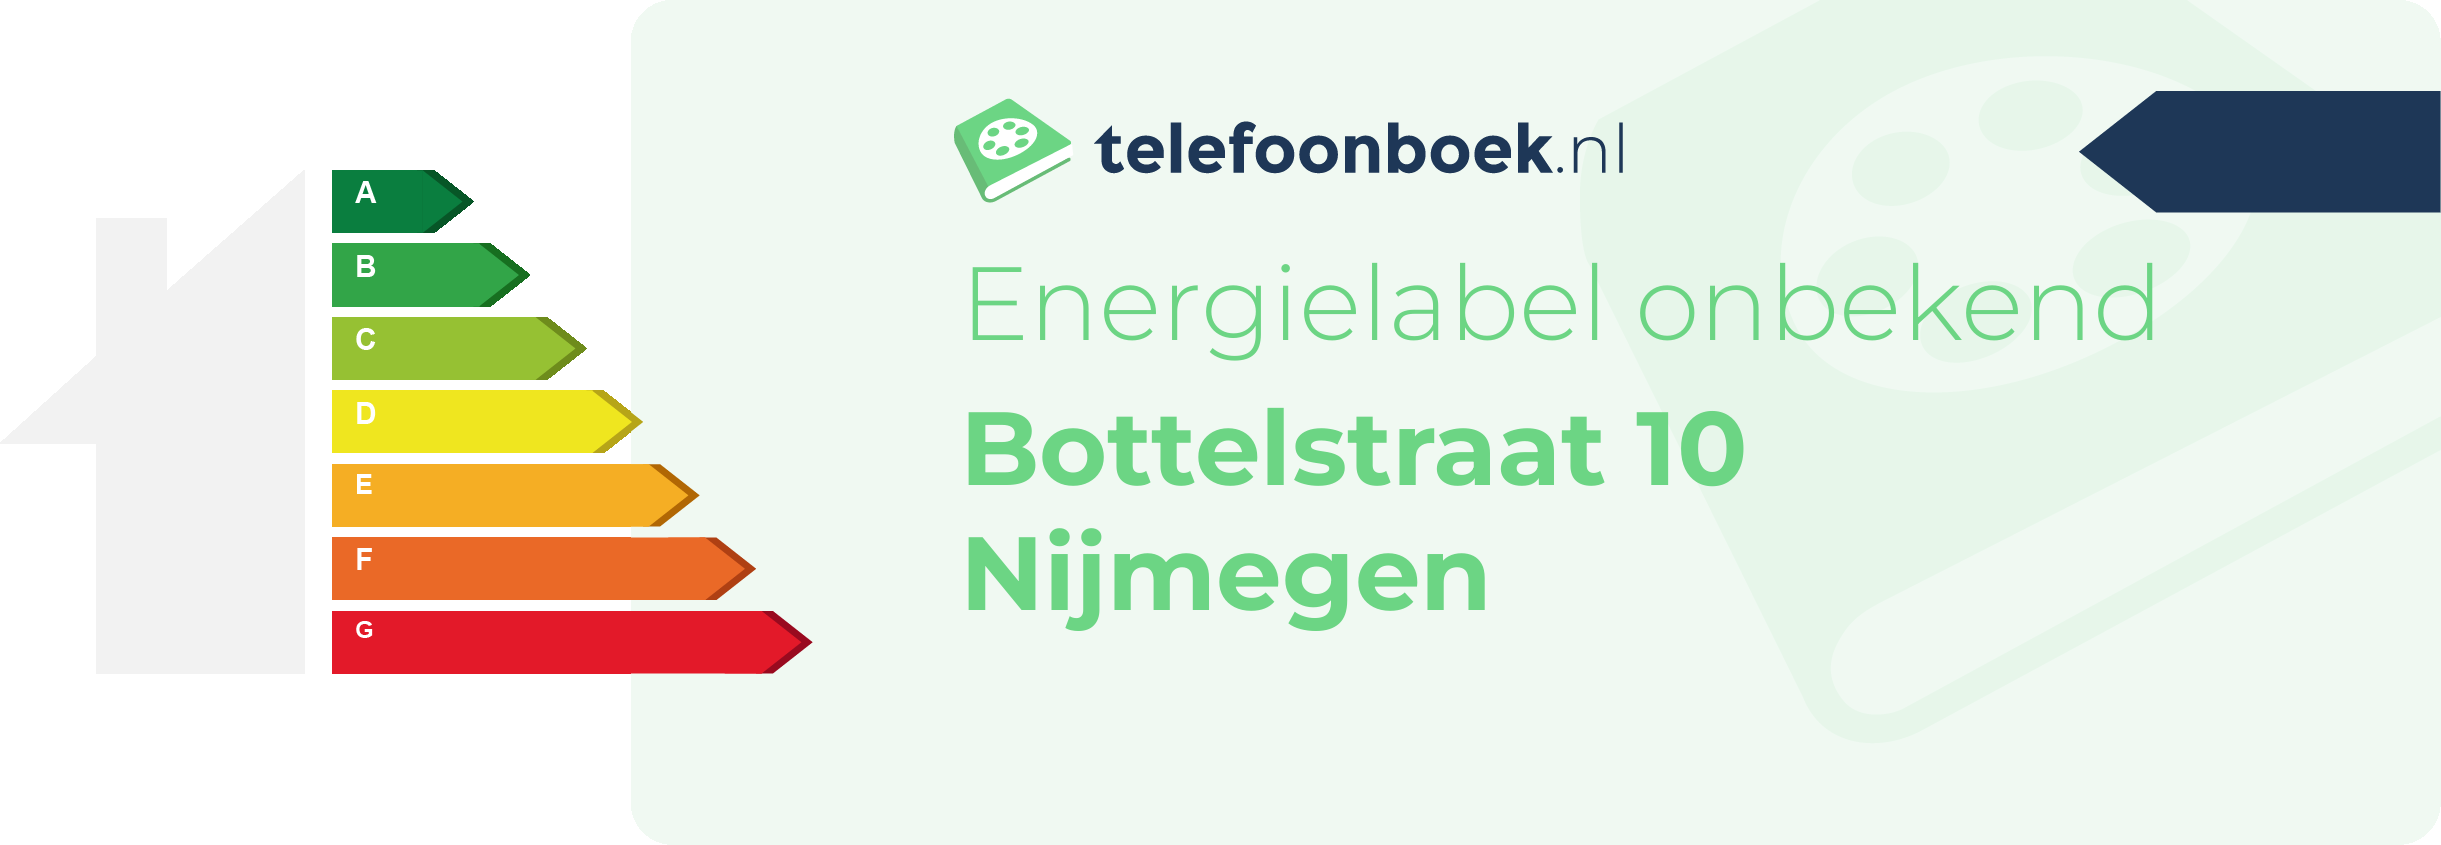 Energielabel Bottelstraat 10 Nijmegen